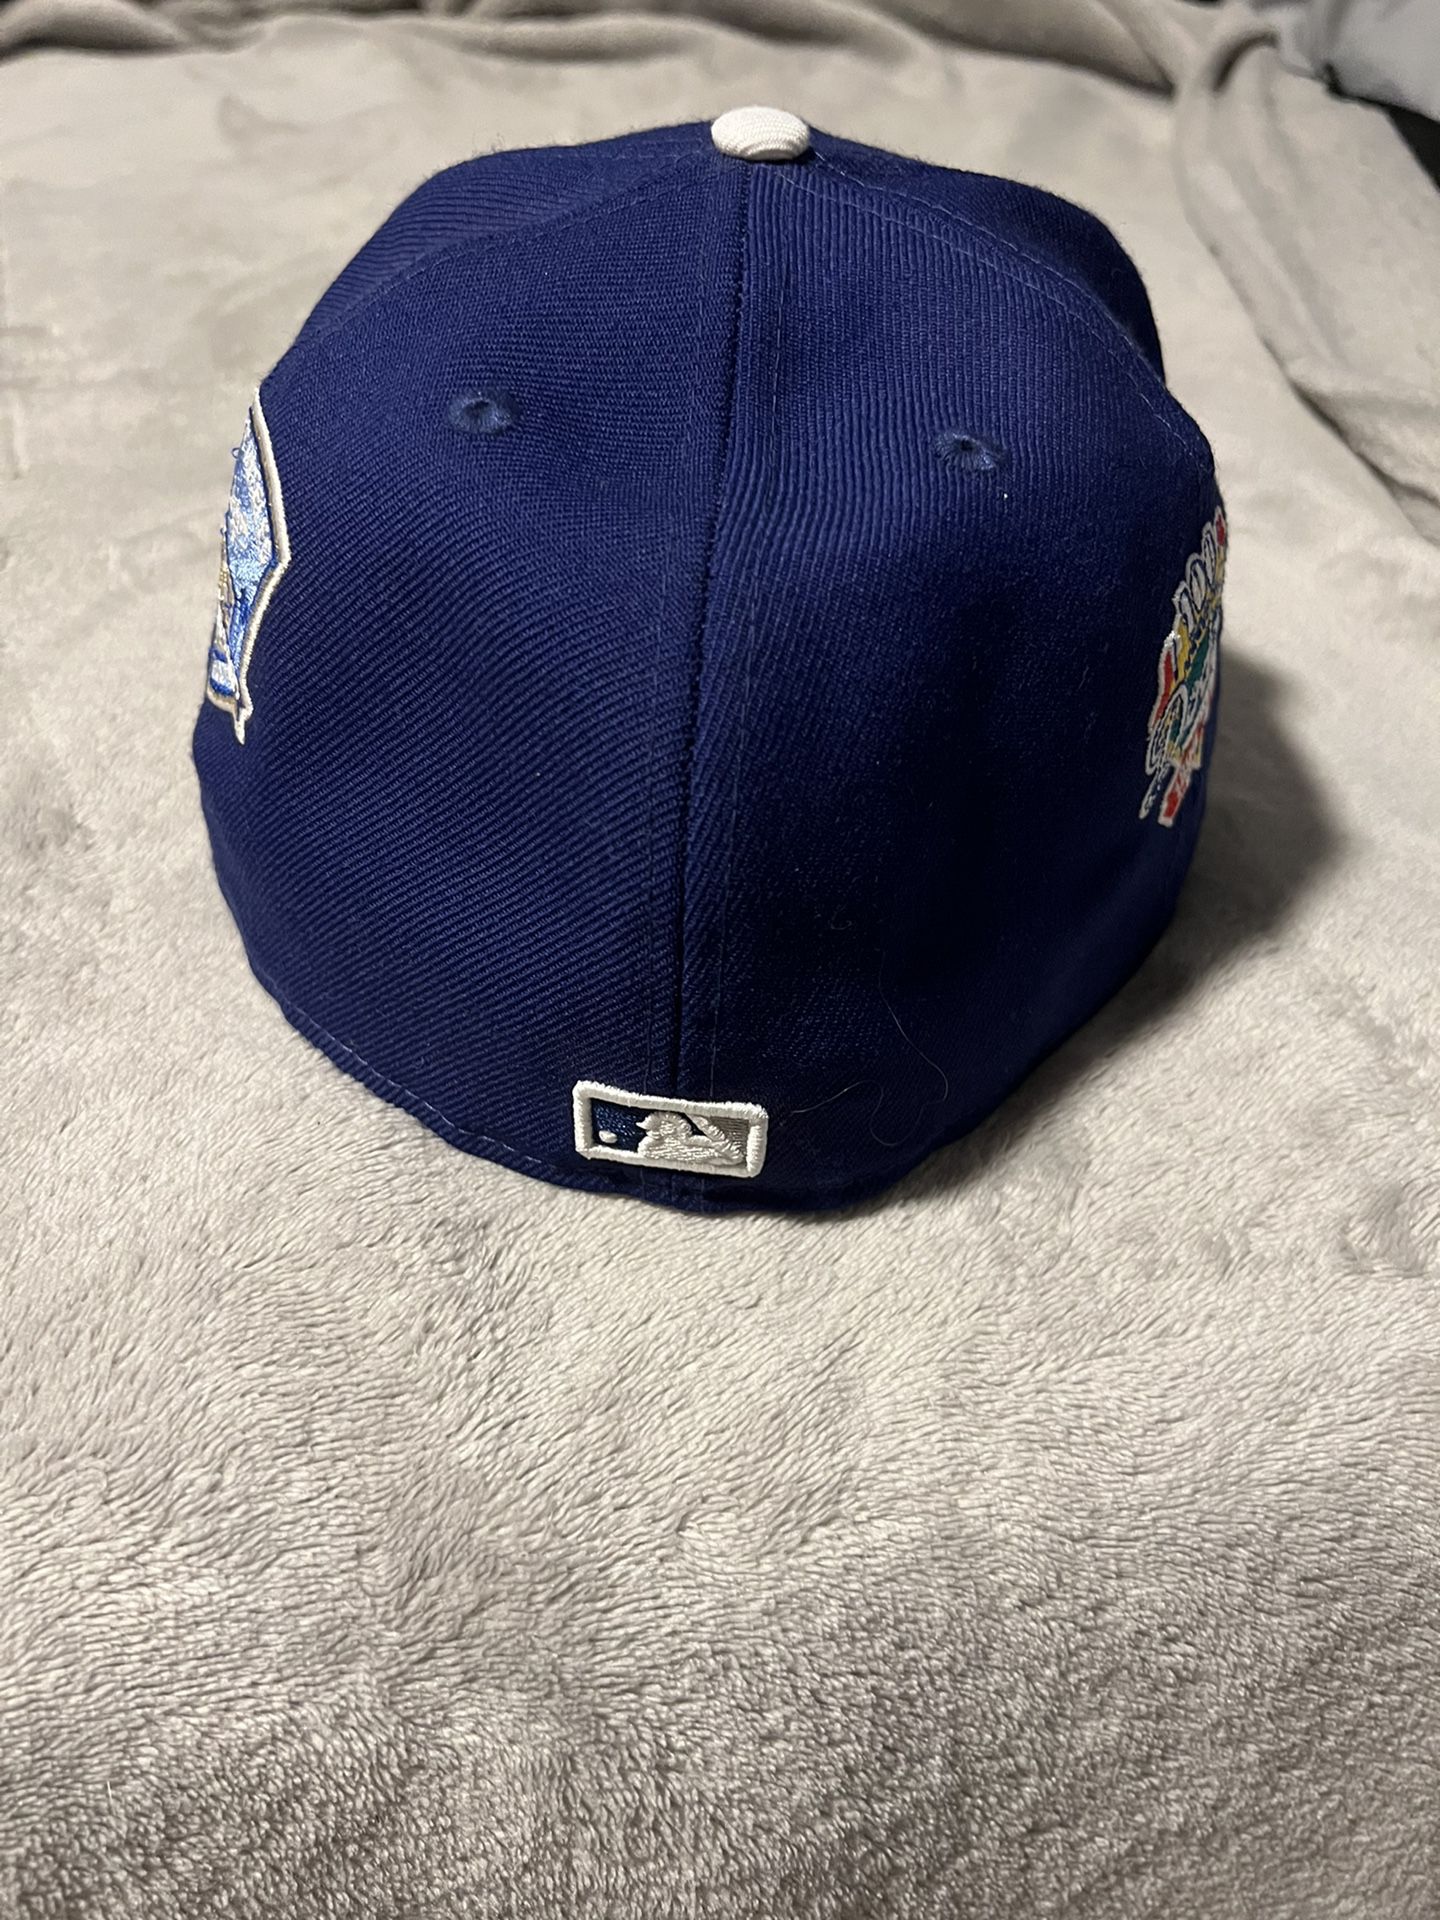 New Era 7x Series Los Angeles Dodgers Hat for Sale in La Verne